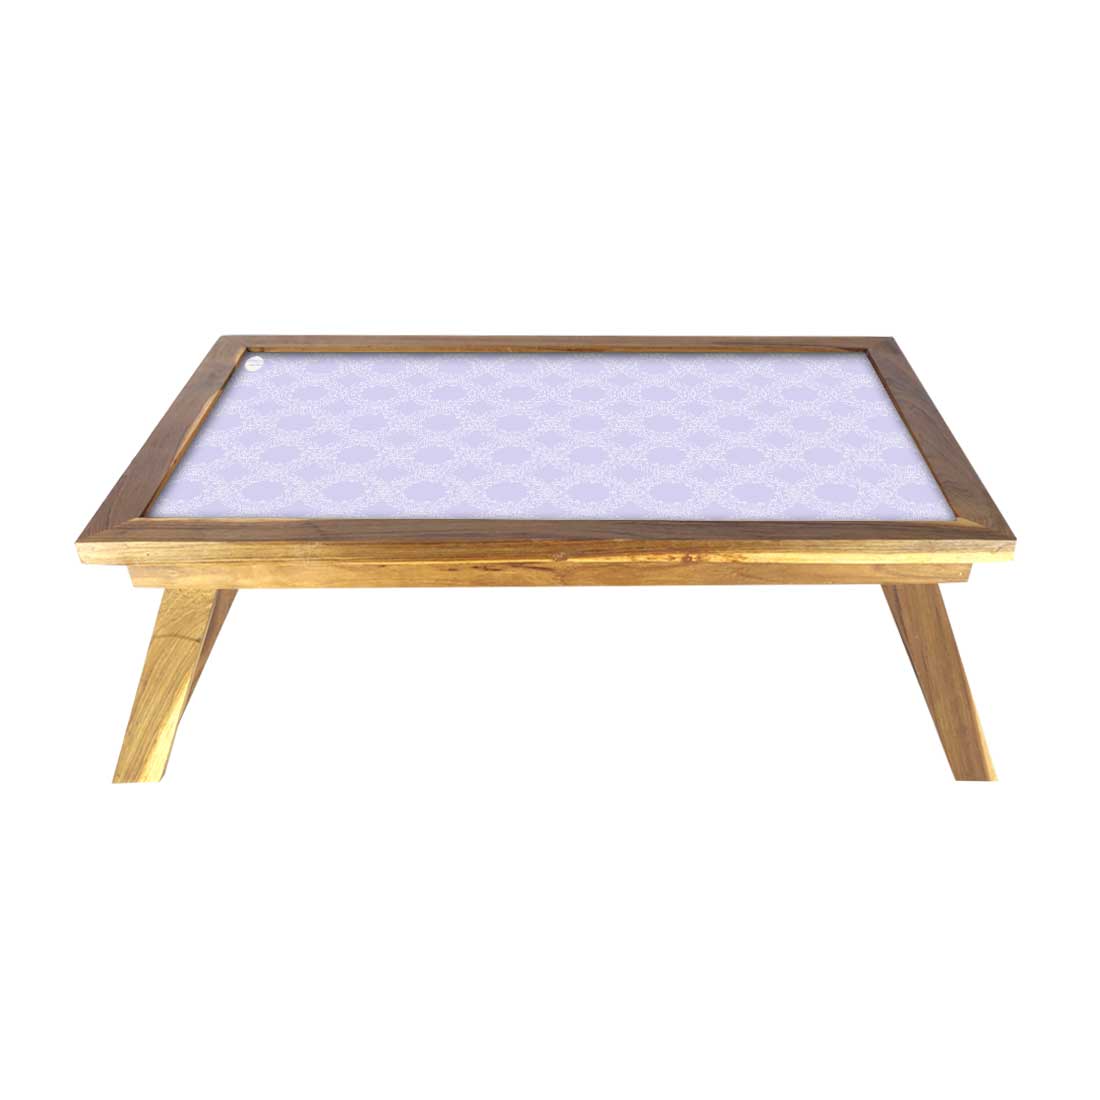 Nutcase Folding Laptop Table For Home Bed Lapdesk Breakfast Table Foldable Teak Wooden Study Desk - Purple Designer Pattern Nutcase